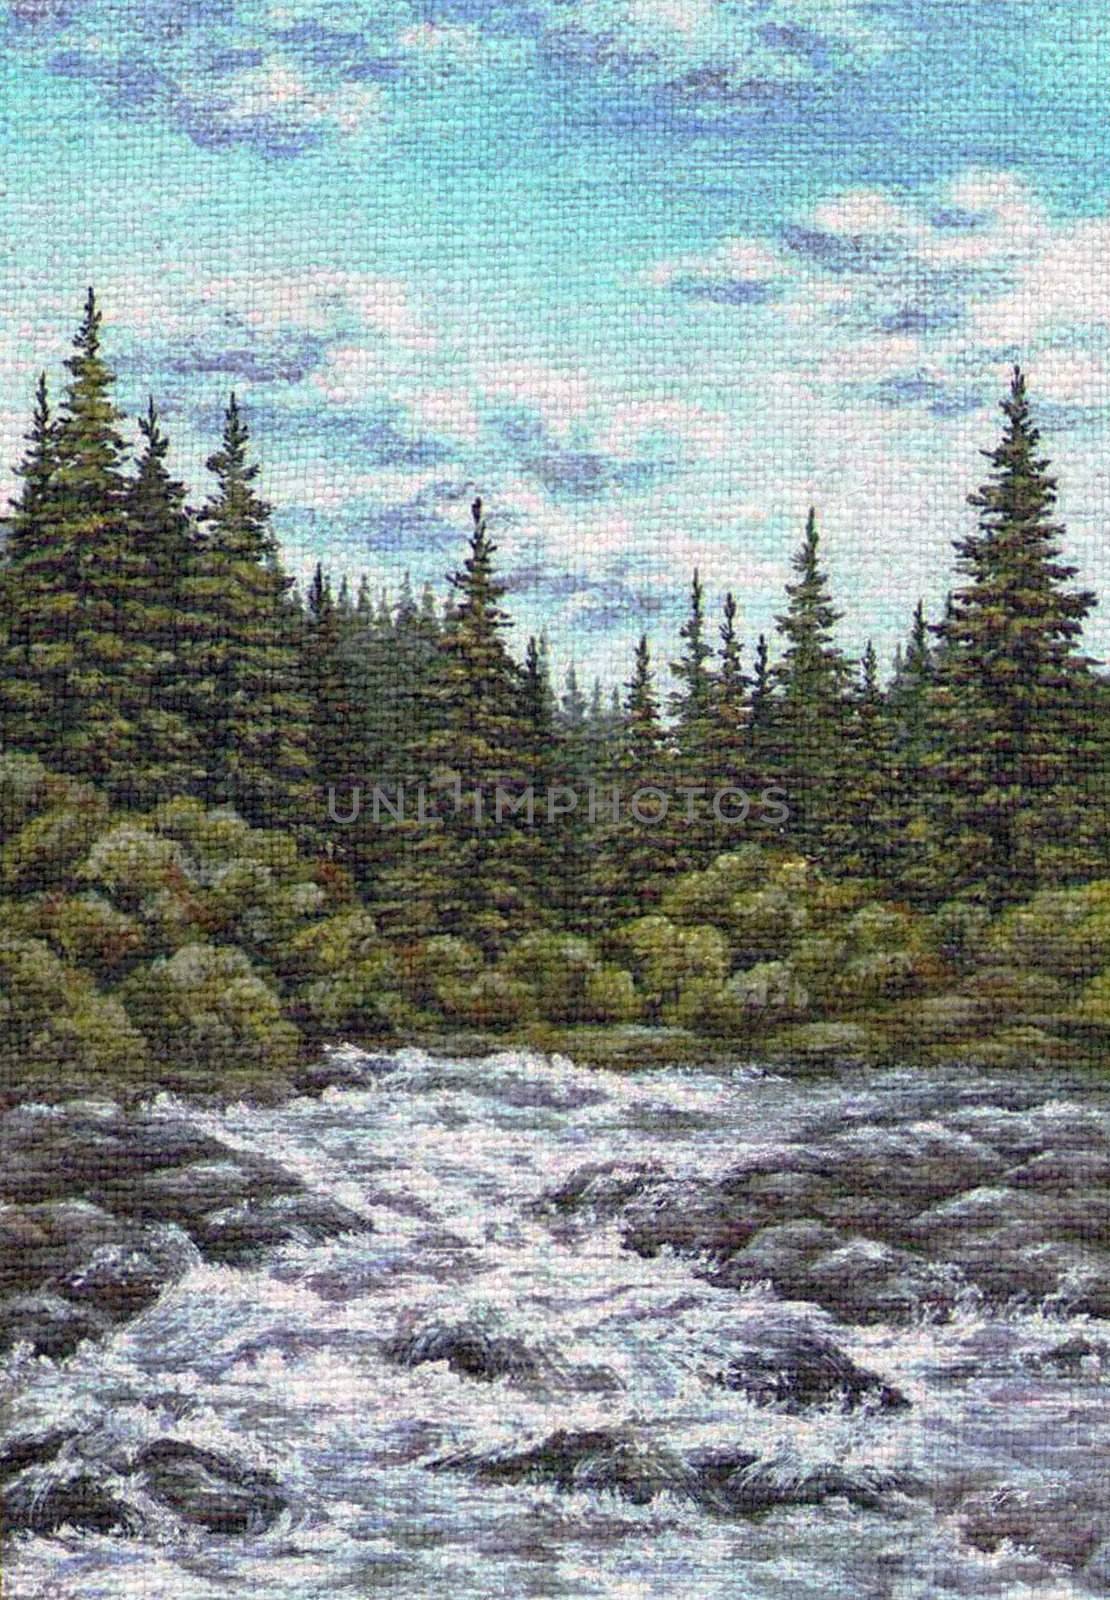 Landscape, mountain river. Altai, Russia. Picture oil paints on a canvas